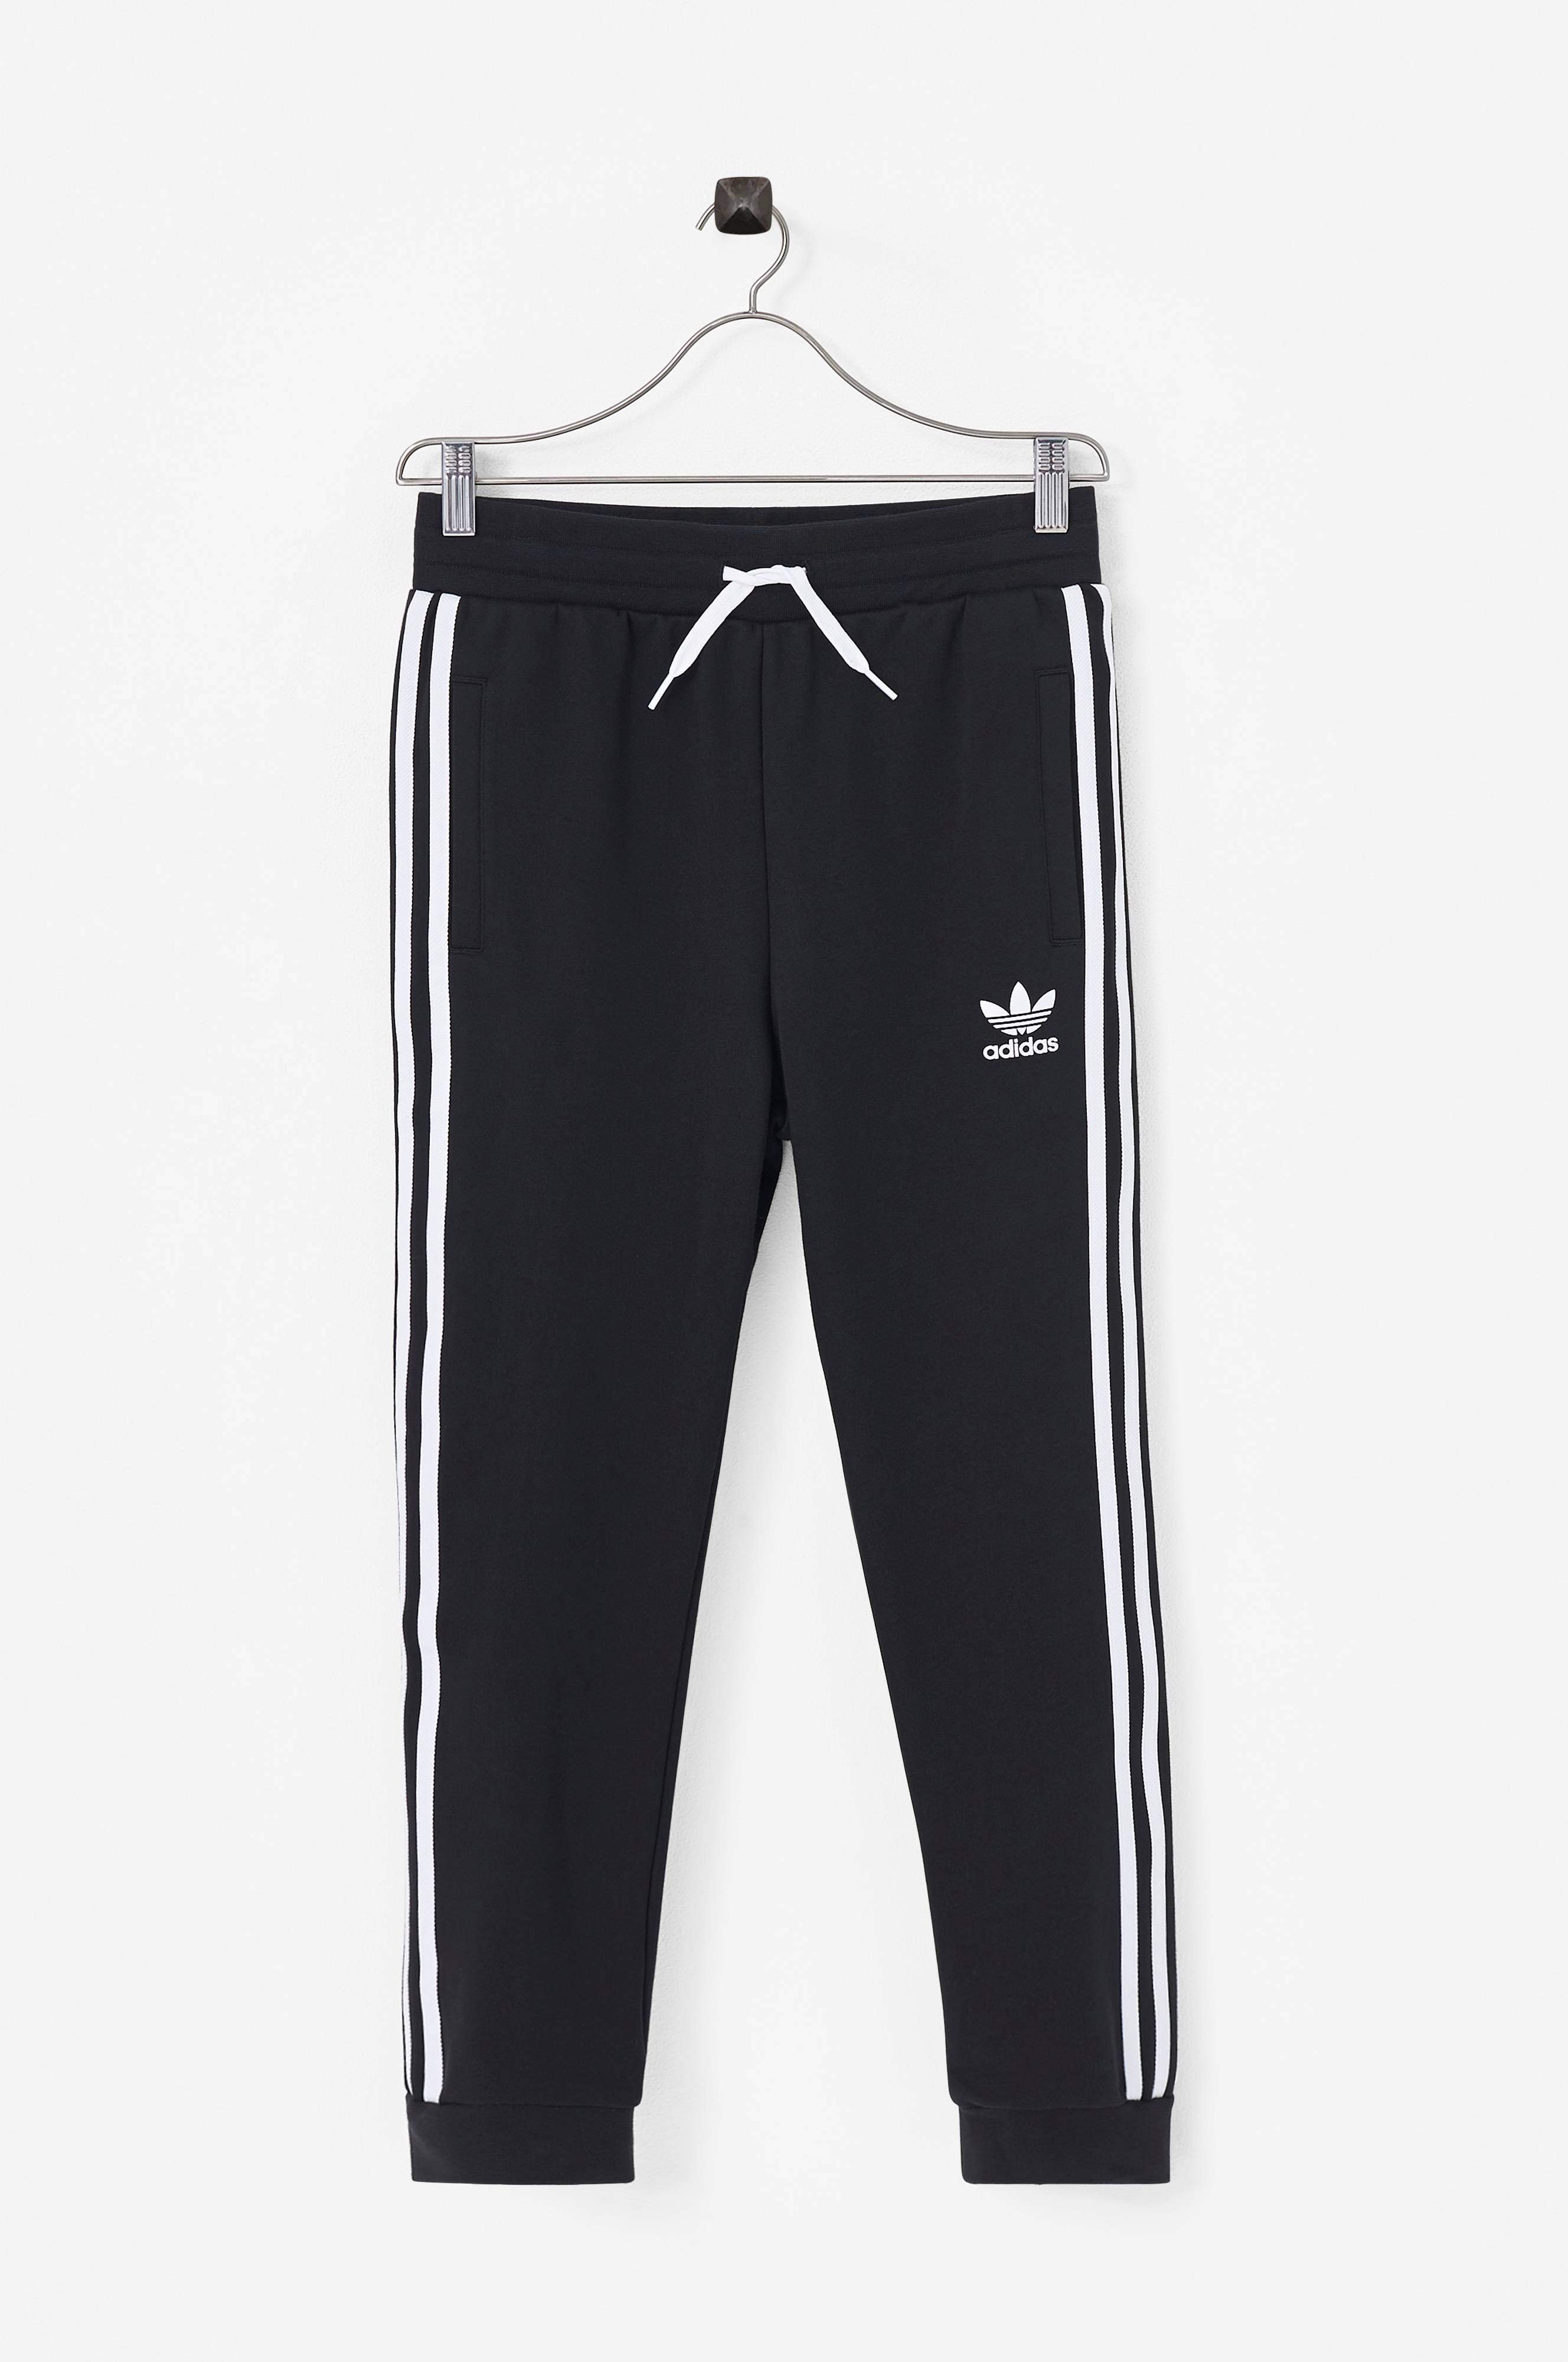 adidas Originals 3 stripes Pants treenihousut - Musta - Urheiluhousut